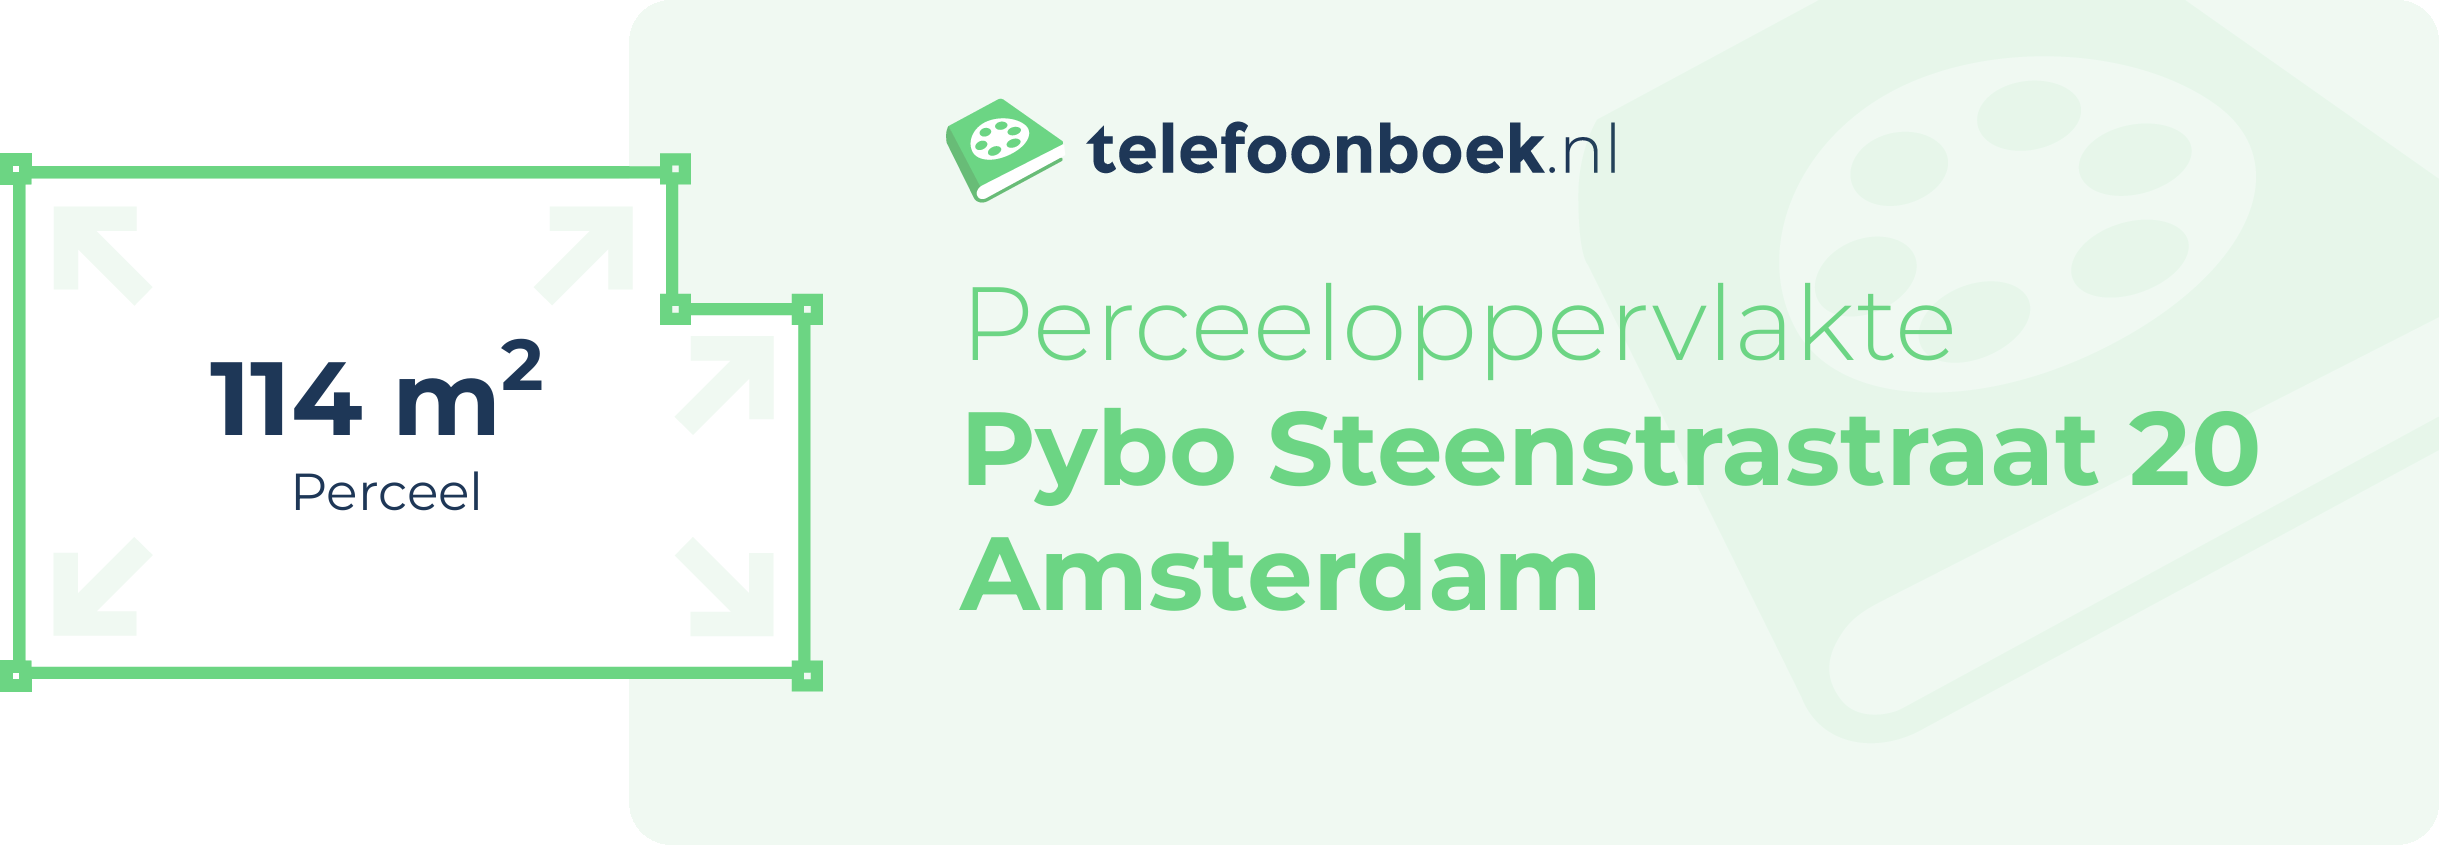 Perceeloppervlakte Pybo Steenstrastraat 20 Amsterdam